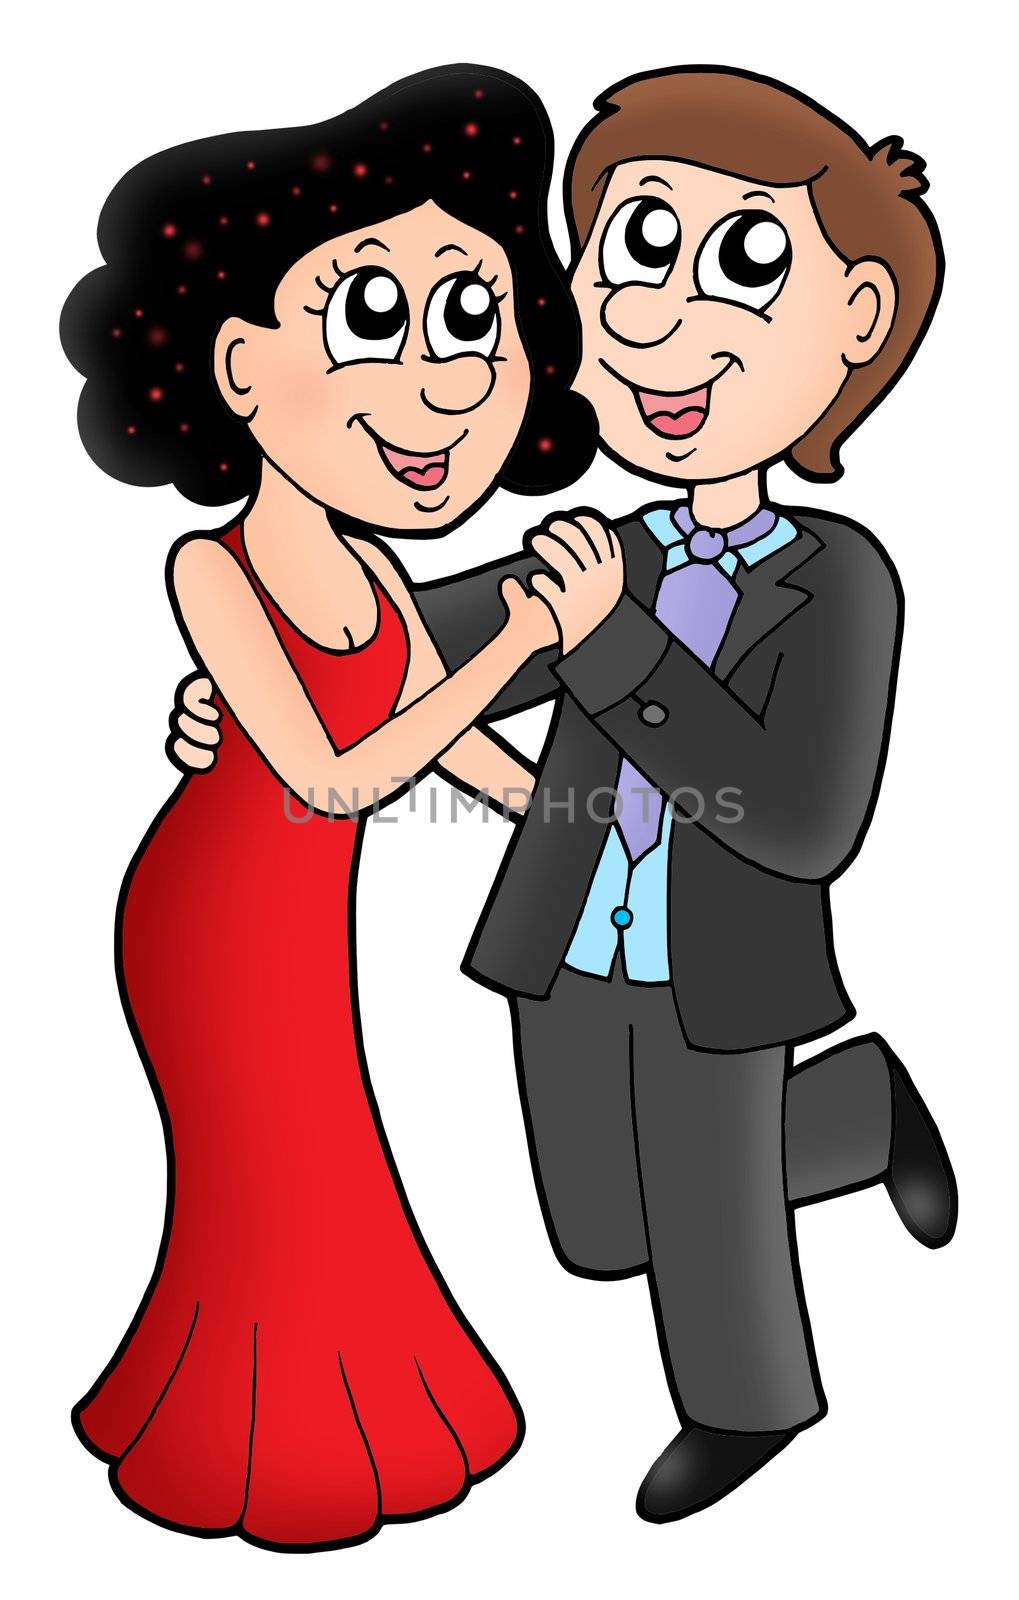 Cartoon dancing couple - color illustration.